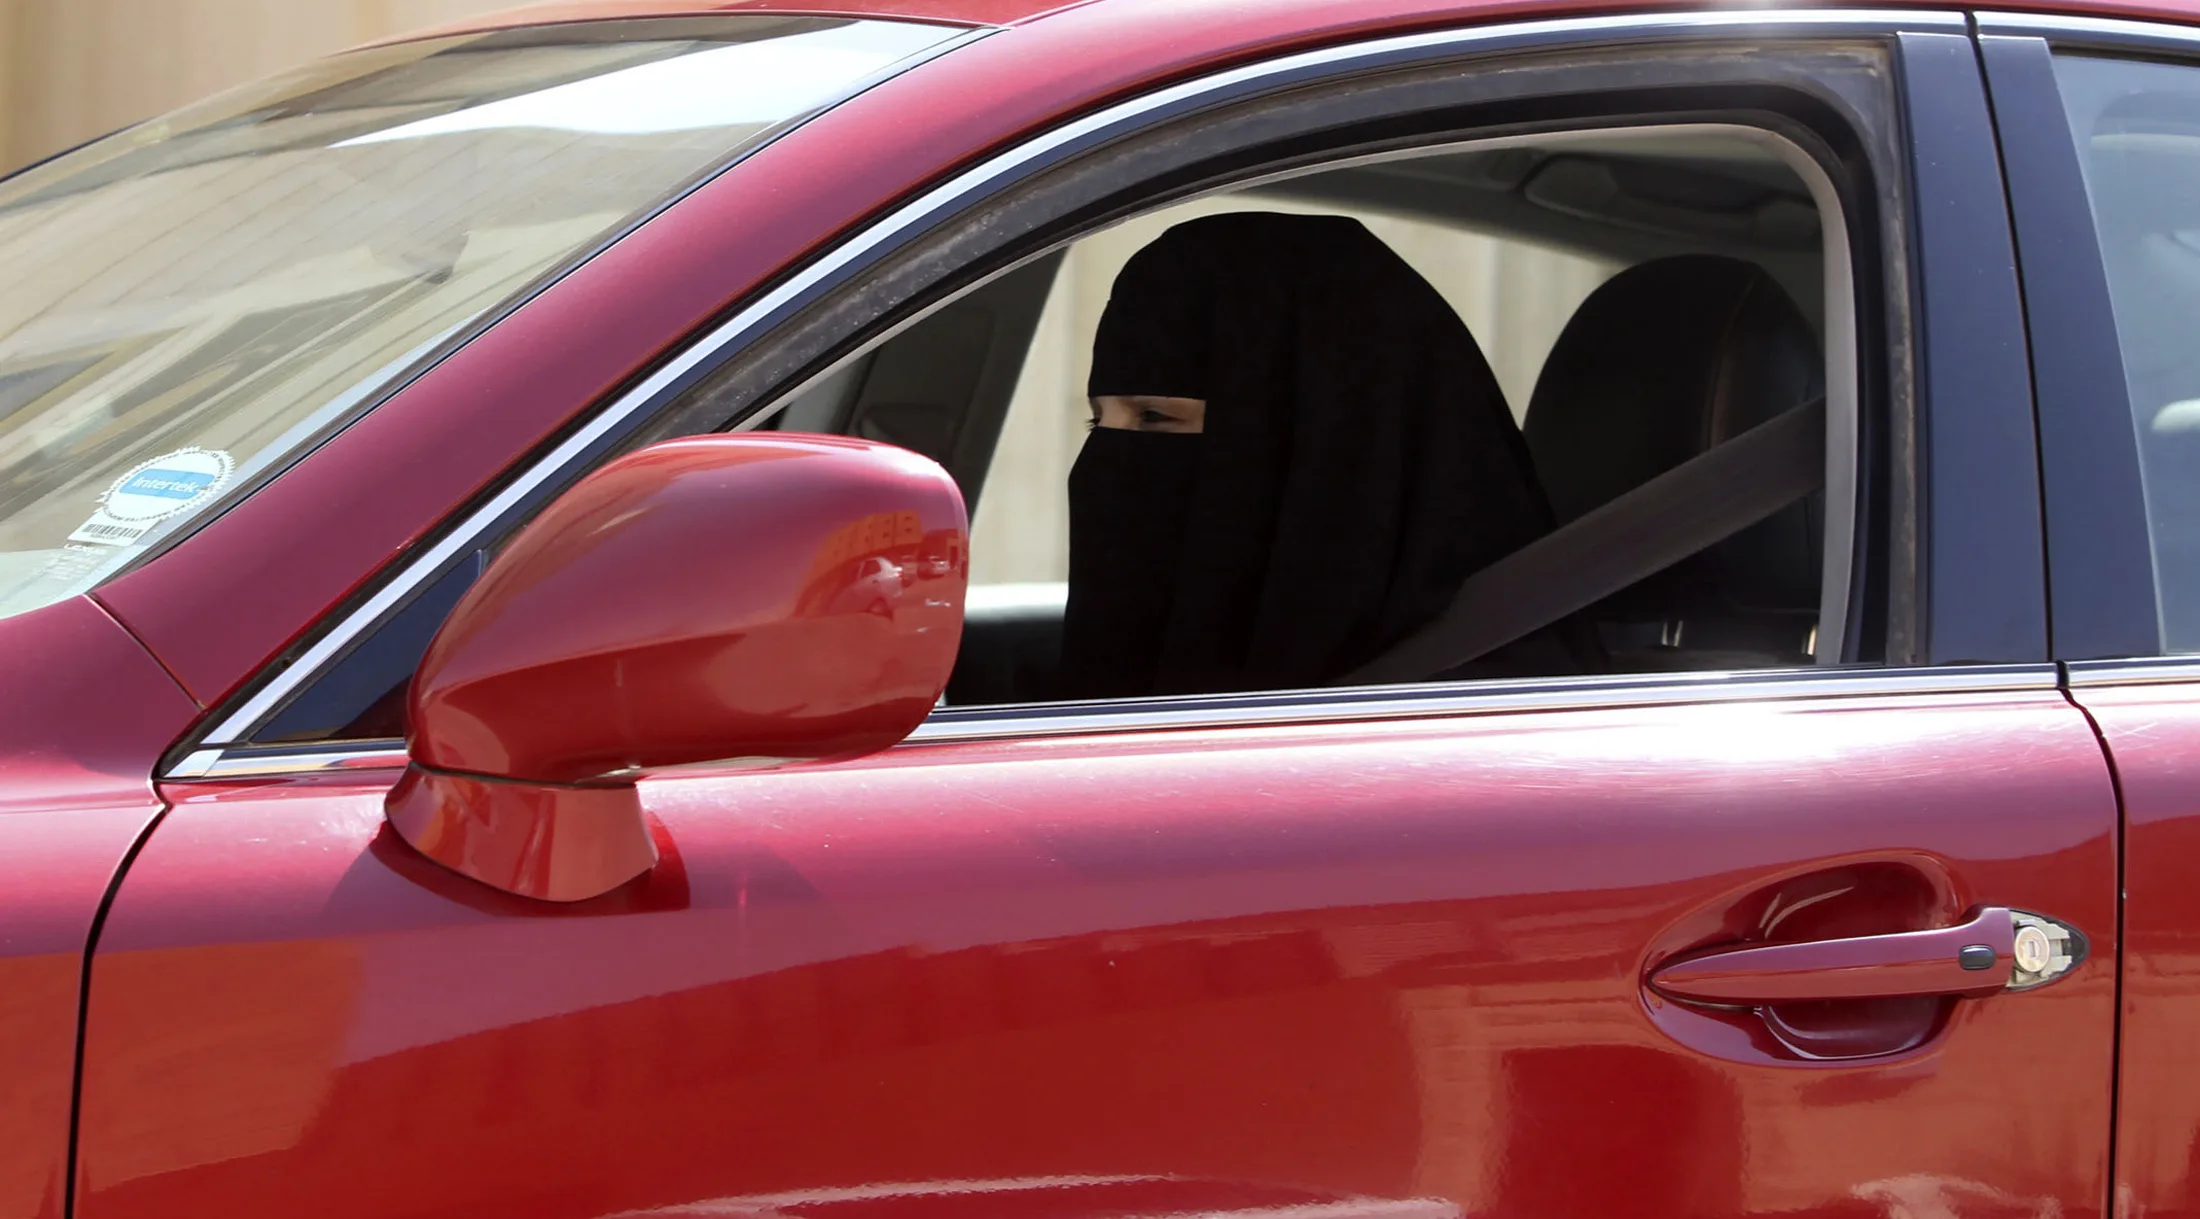 12-29-14-woman-driving-saudi-arabia